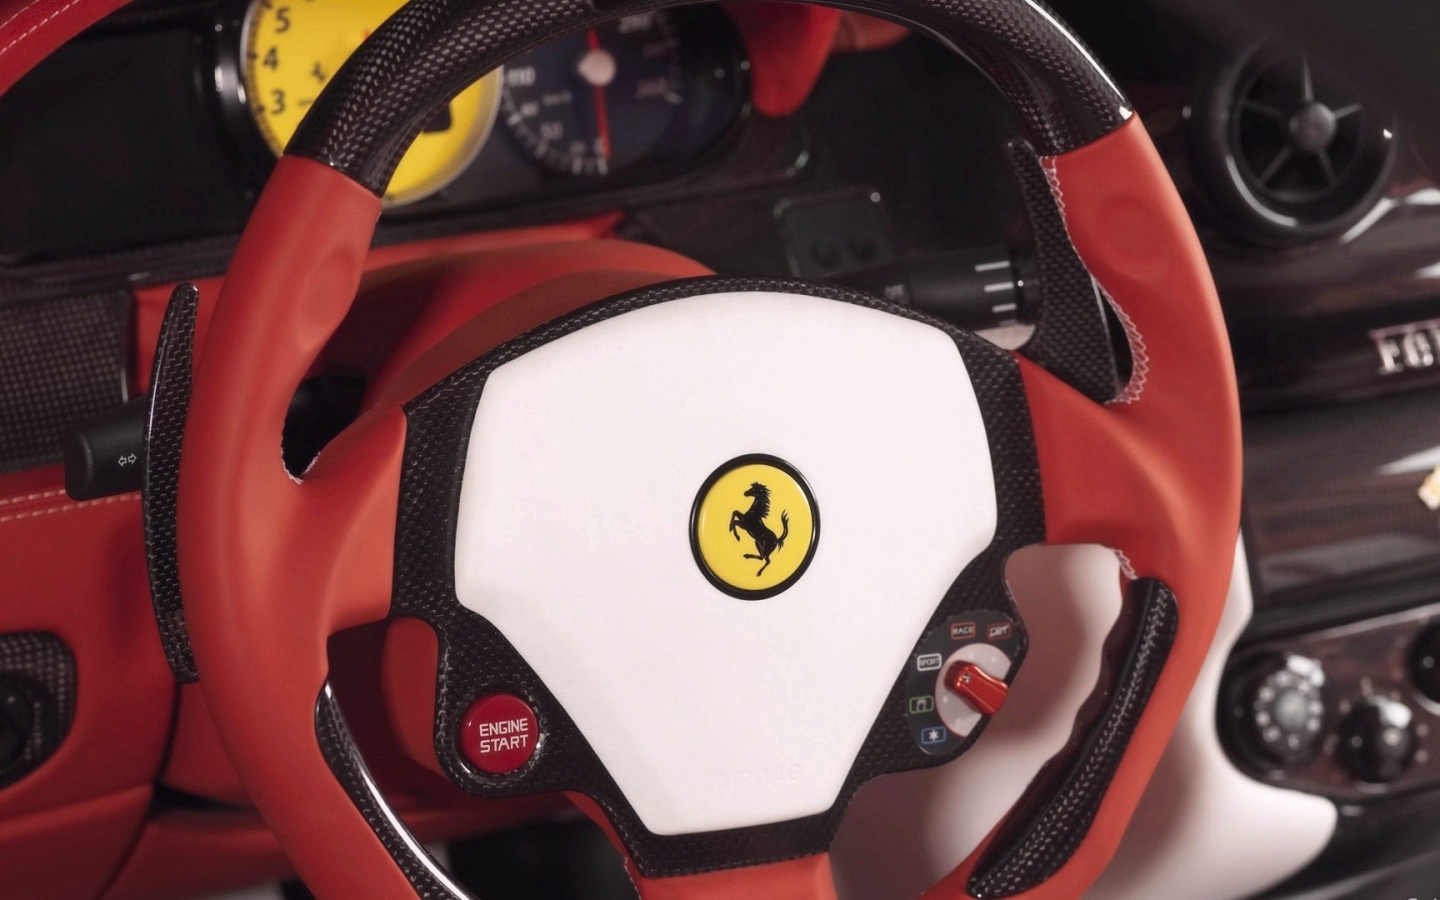 Рулевое колесо спортивного Ferrari